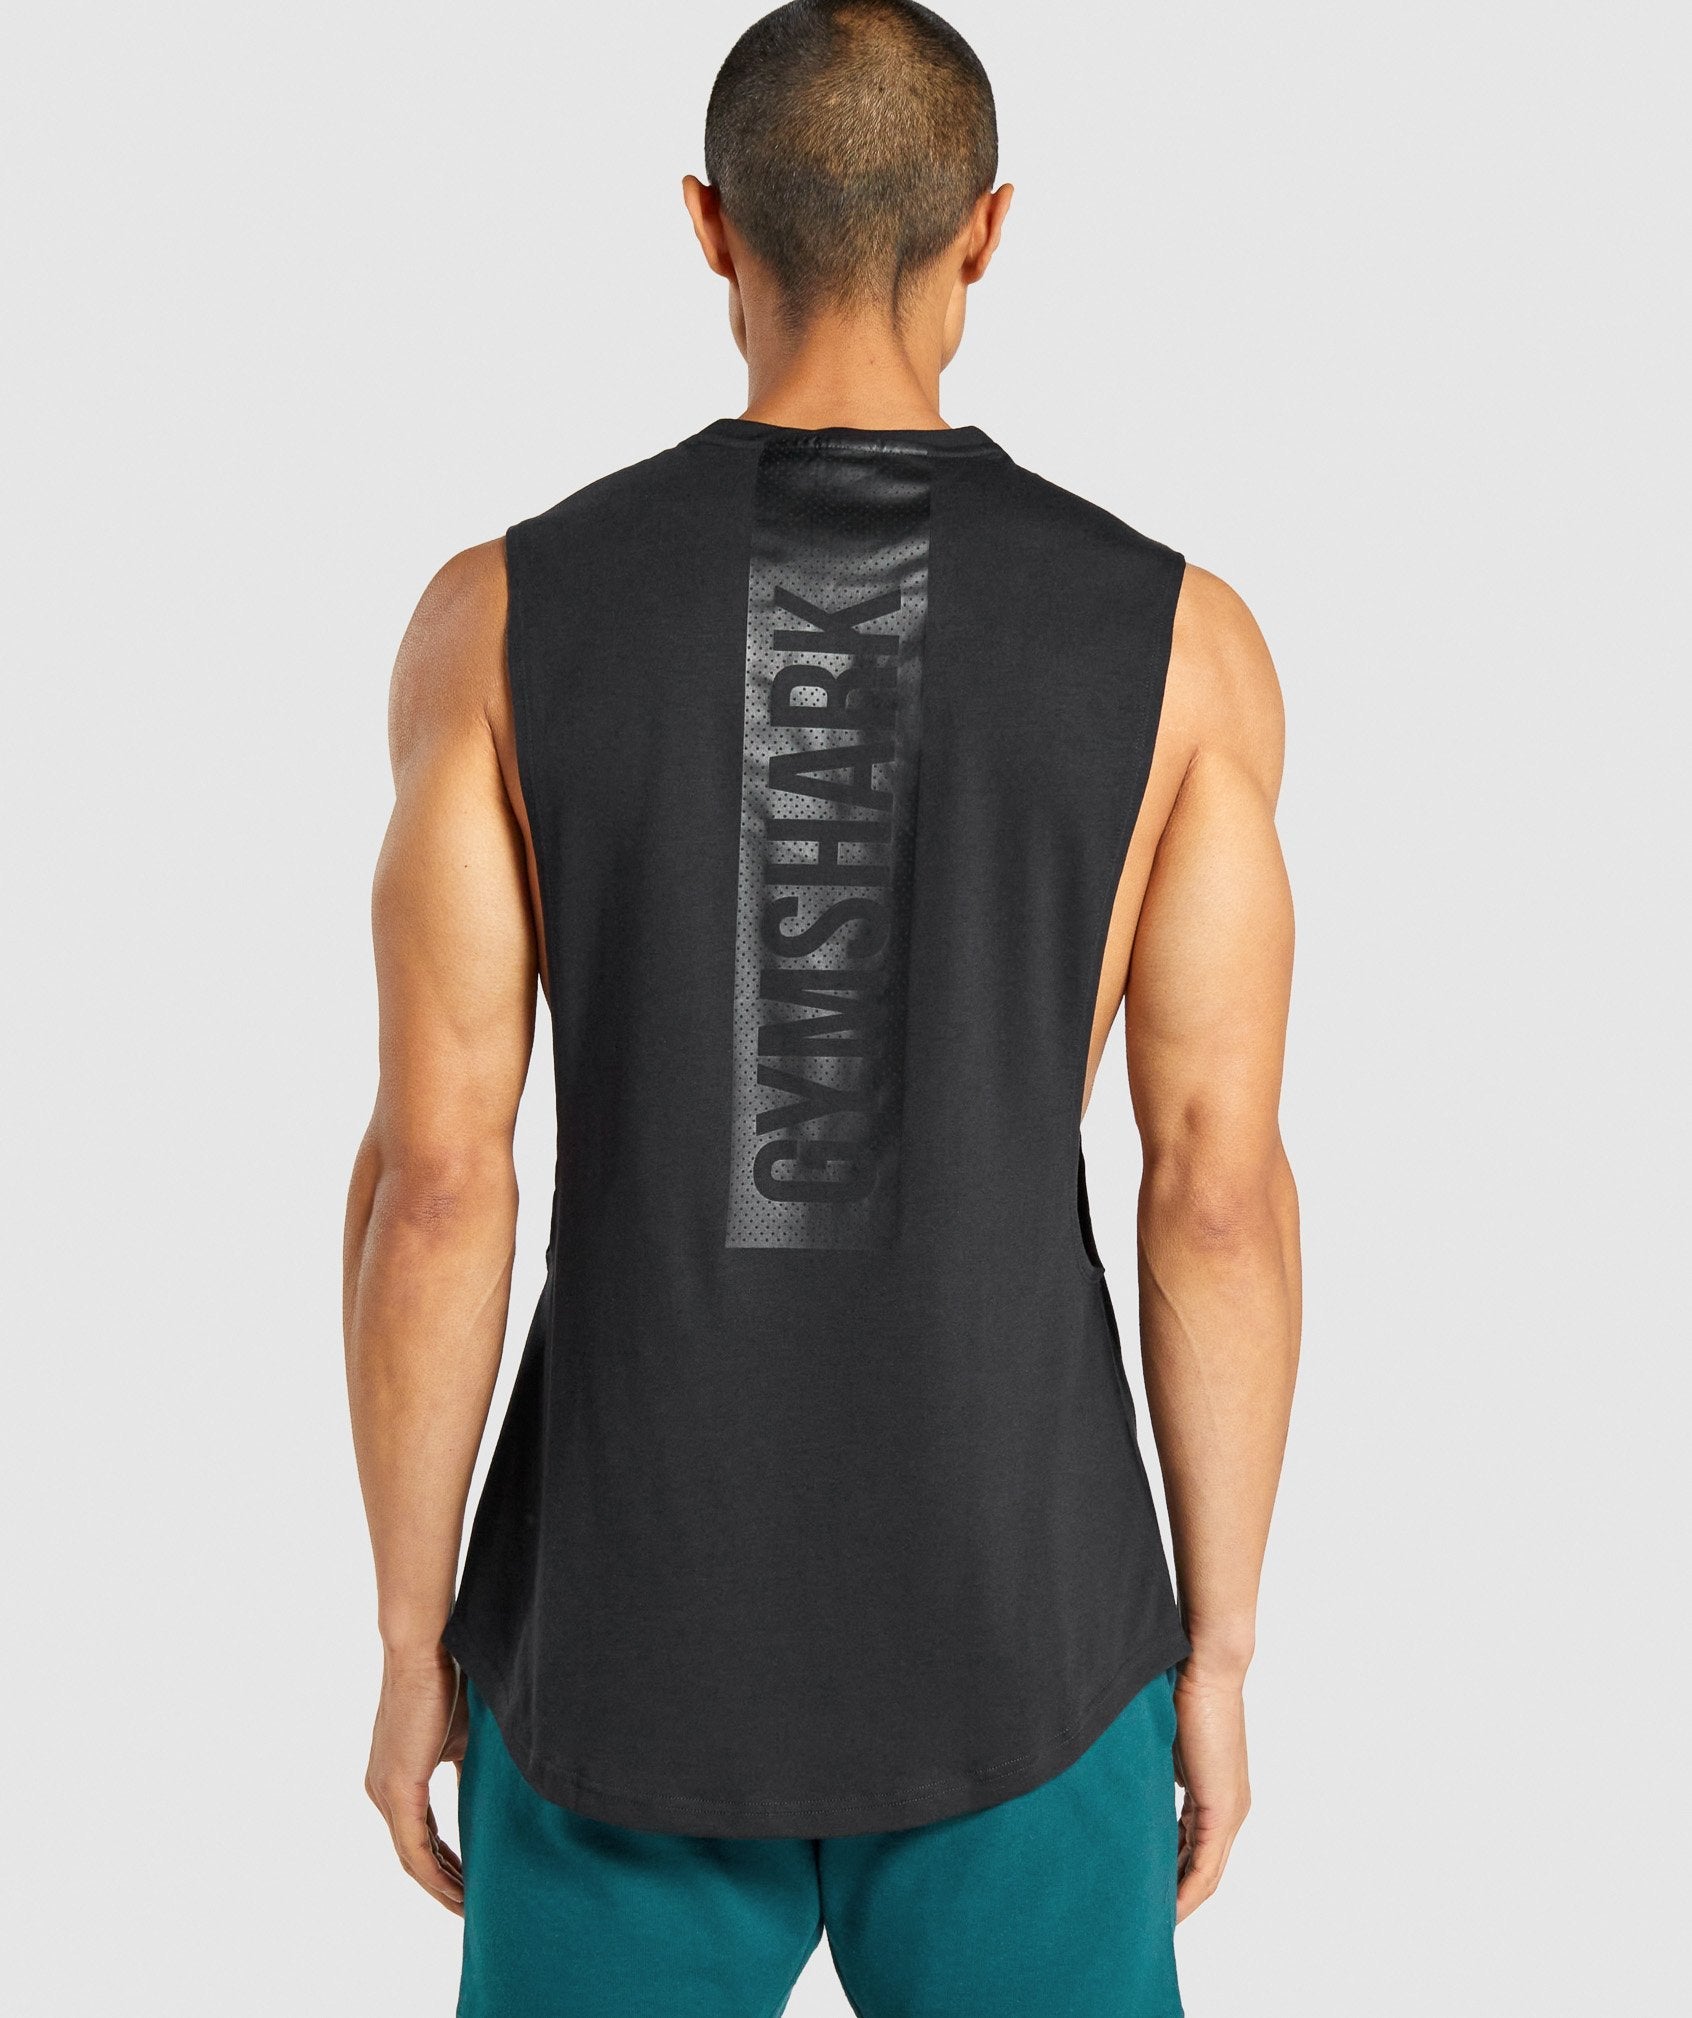 Gymshark tank top shirt - Gem